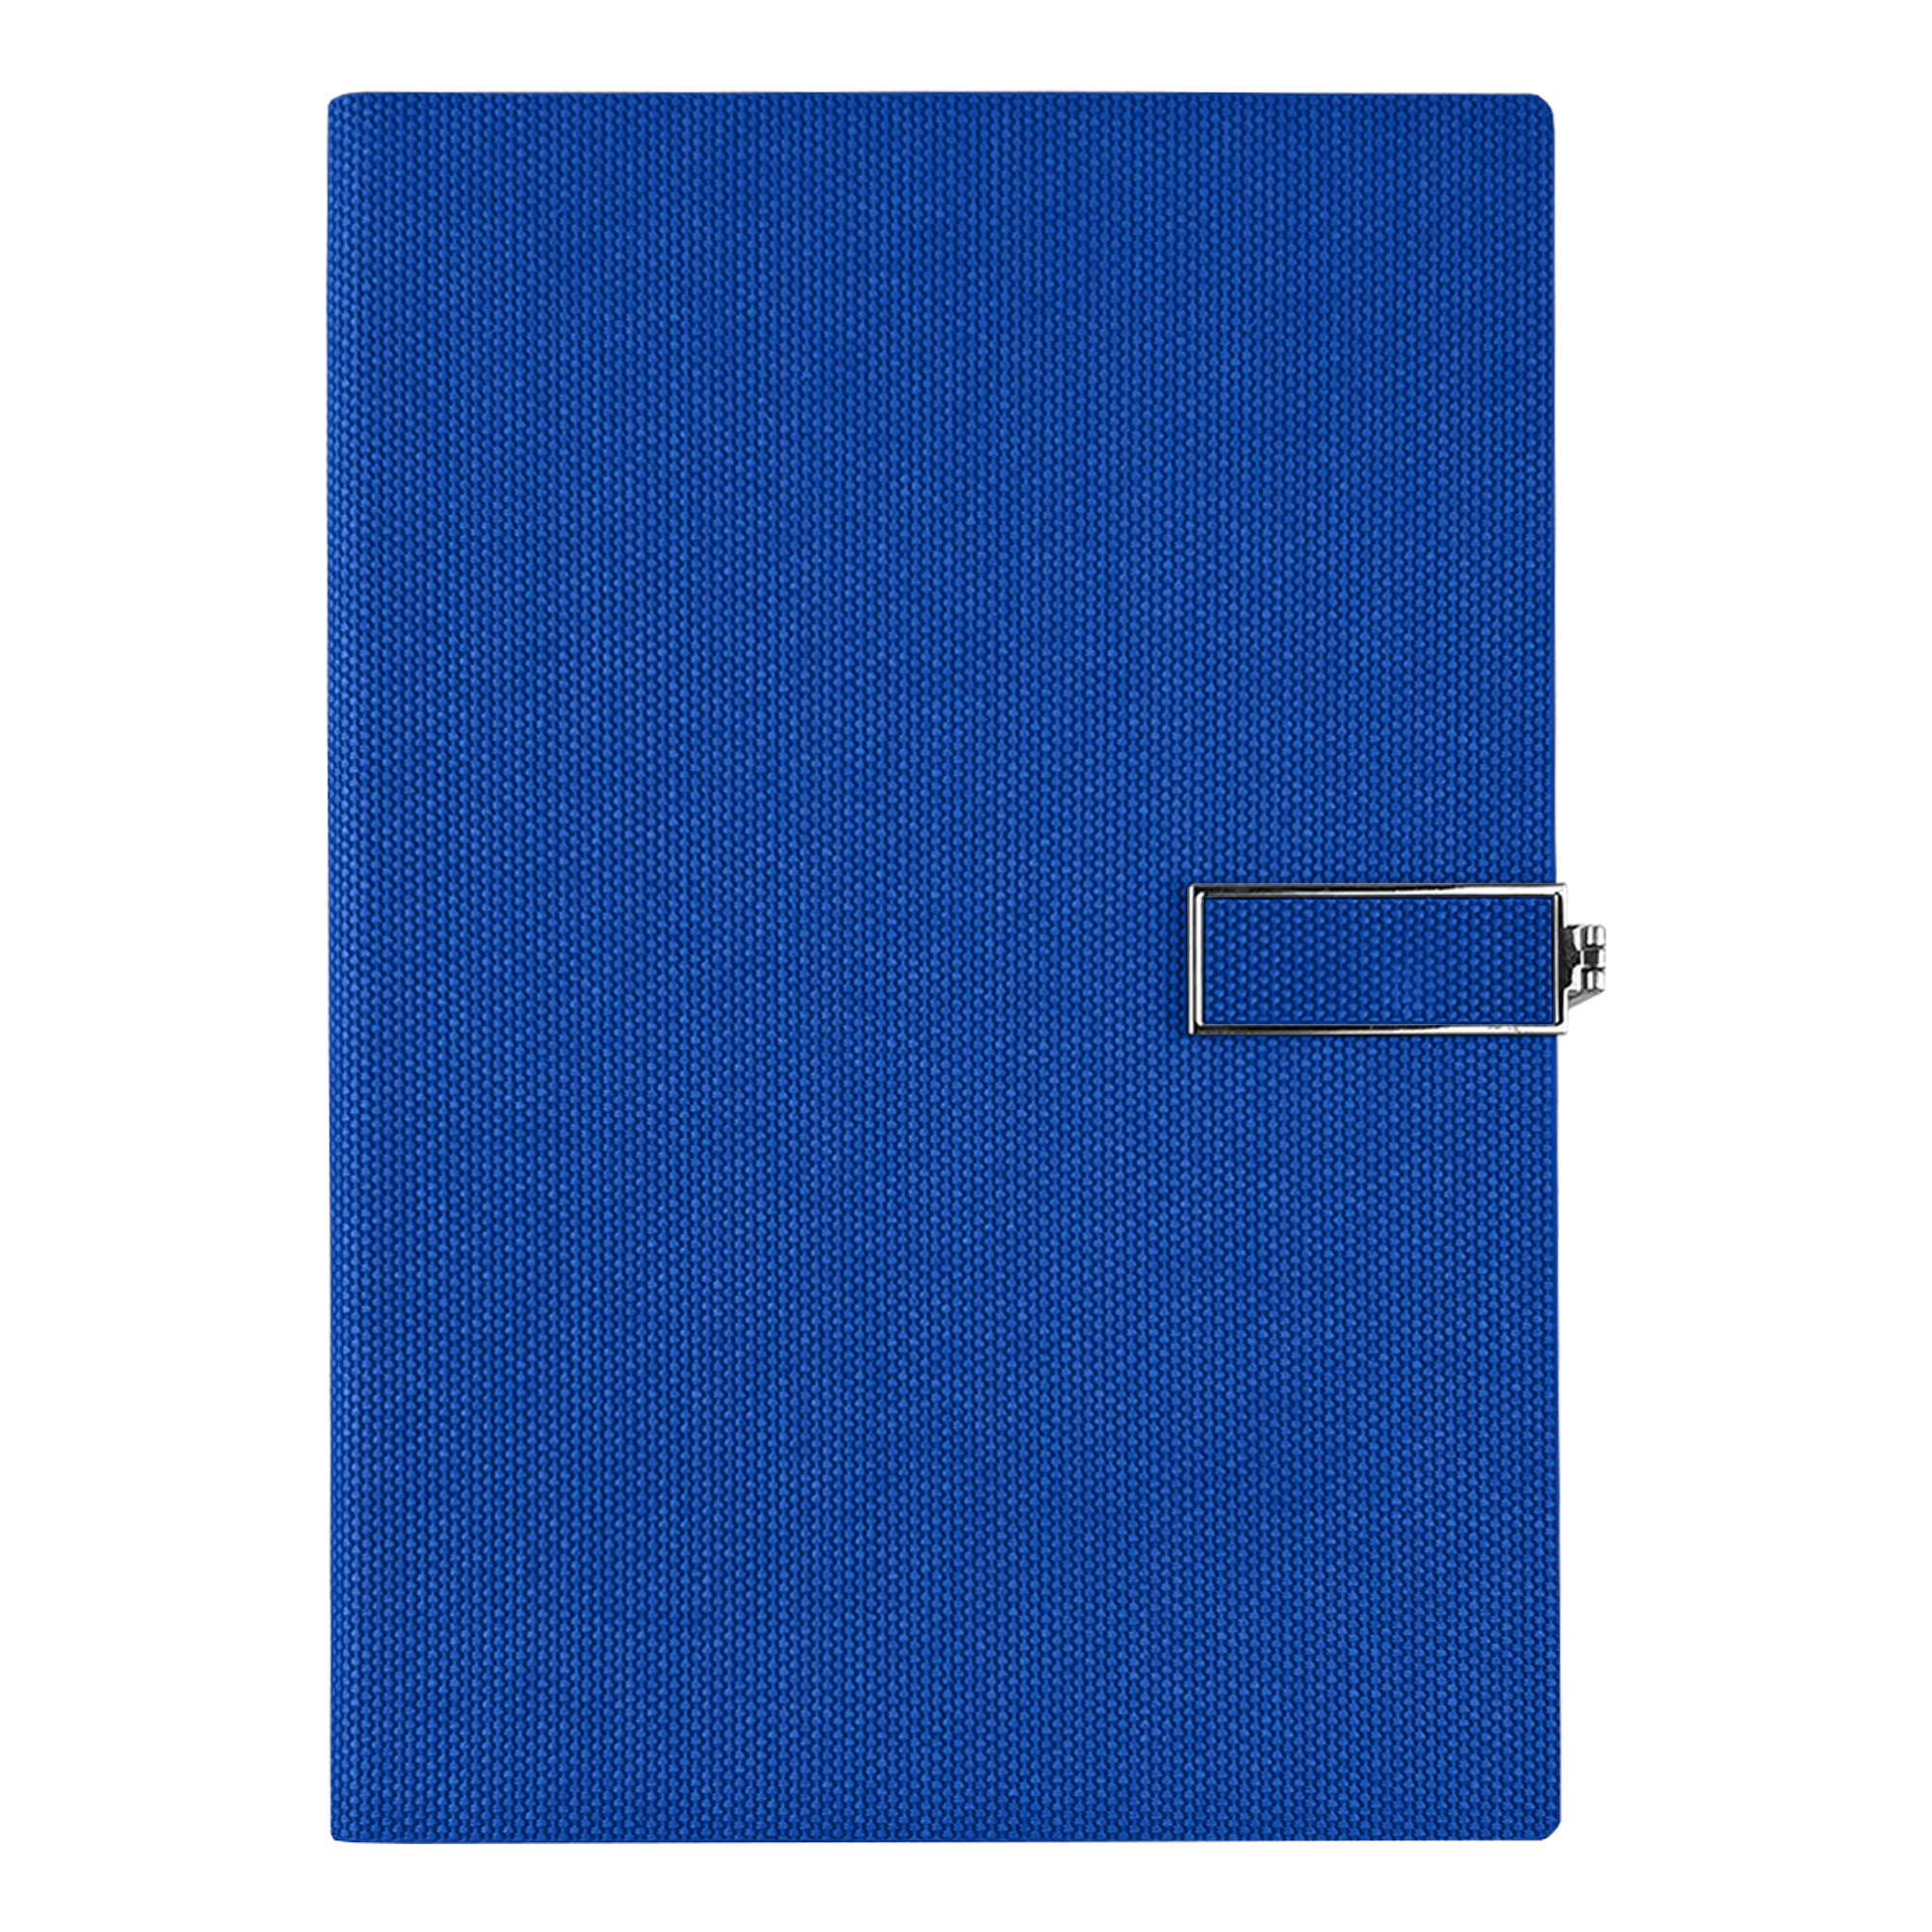 Century Notebook NB023 | Navy Blue